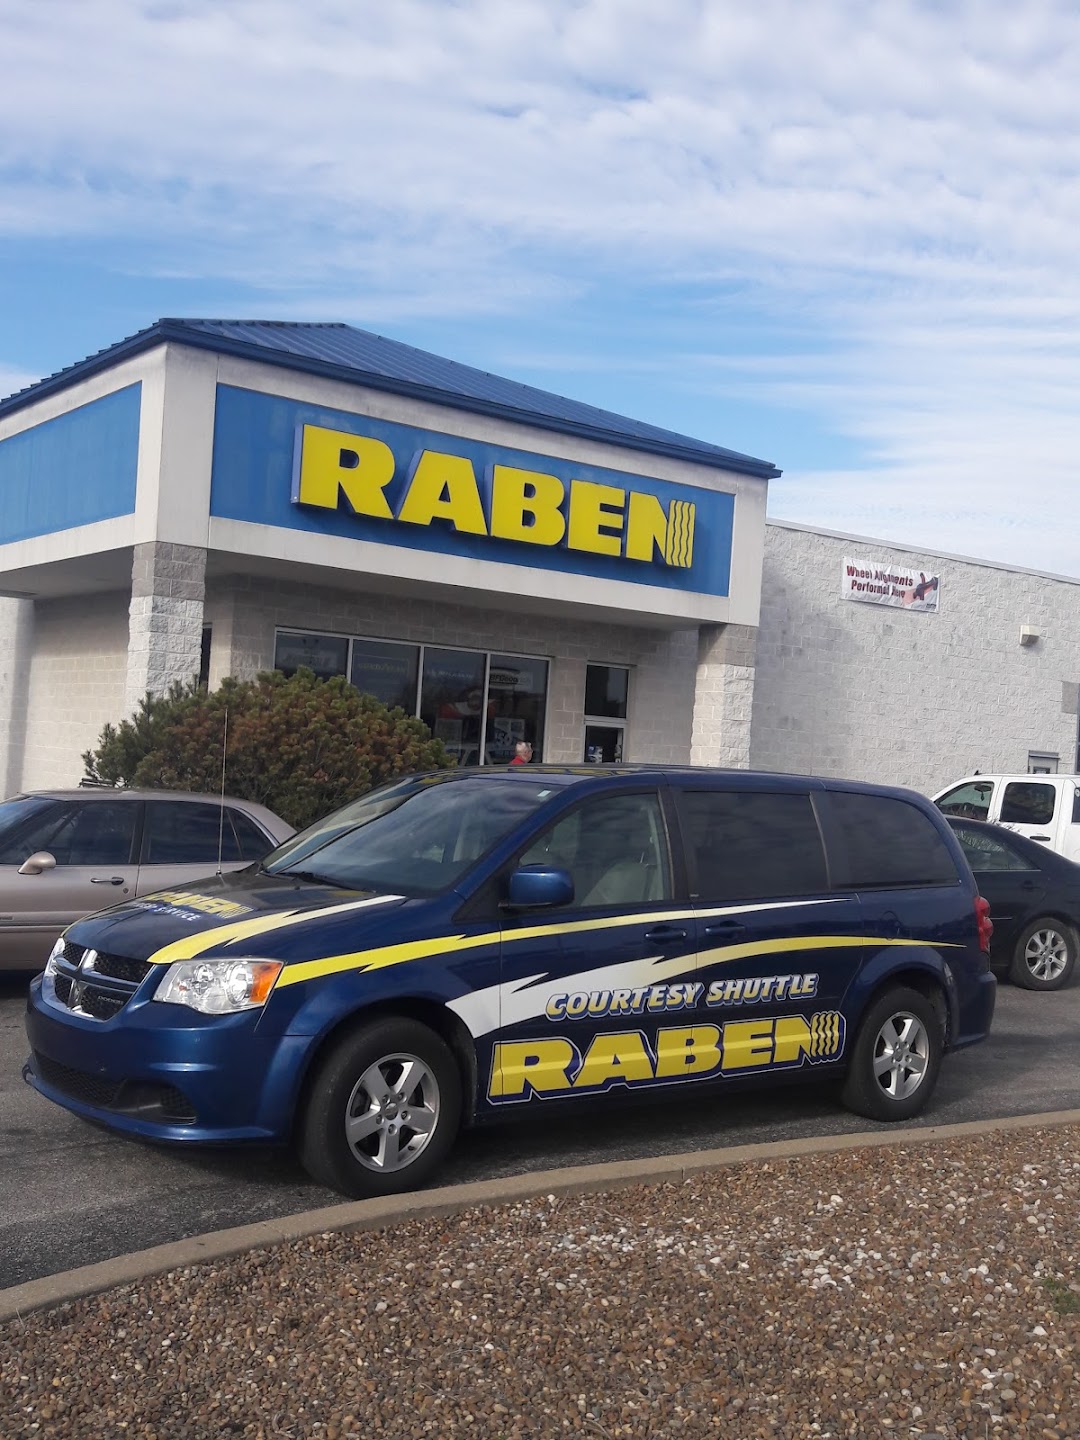 Raben Tire & Auto Service